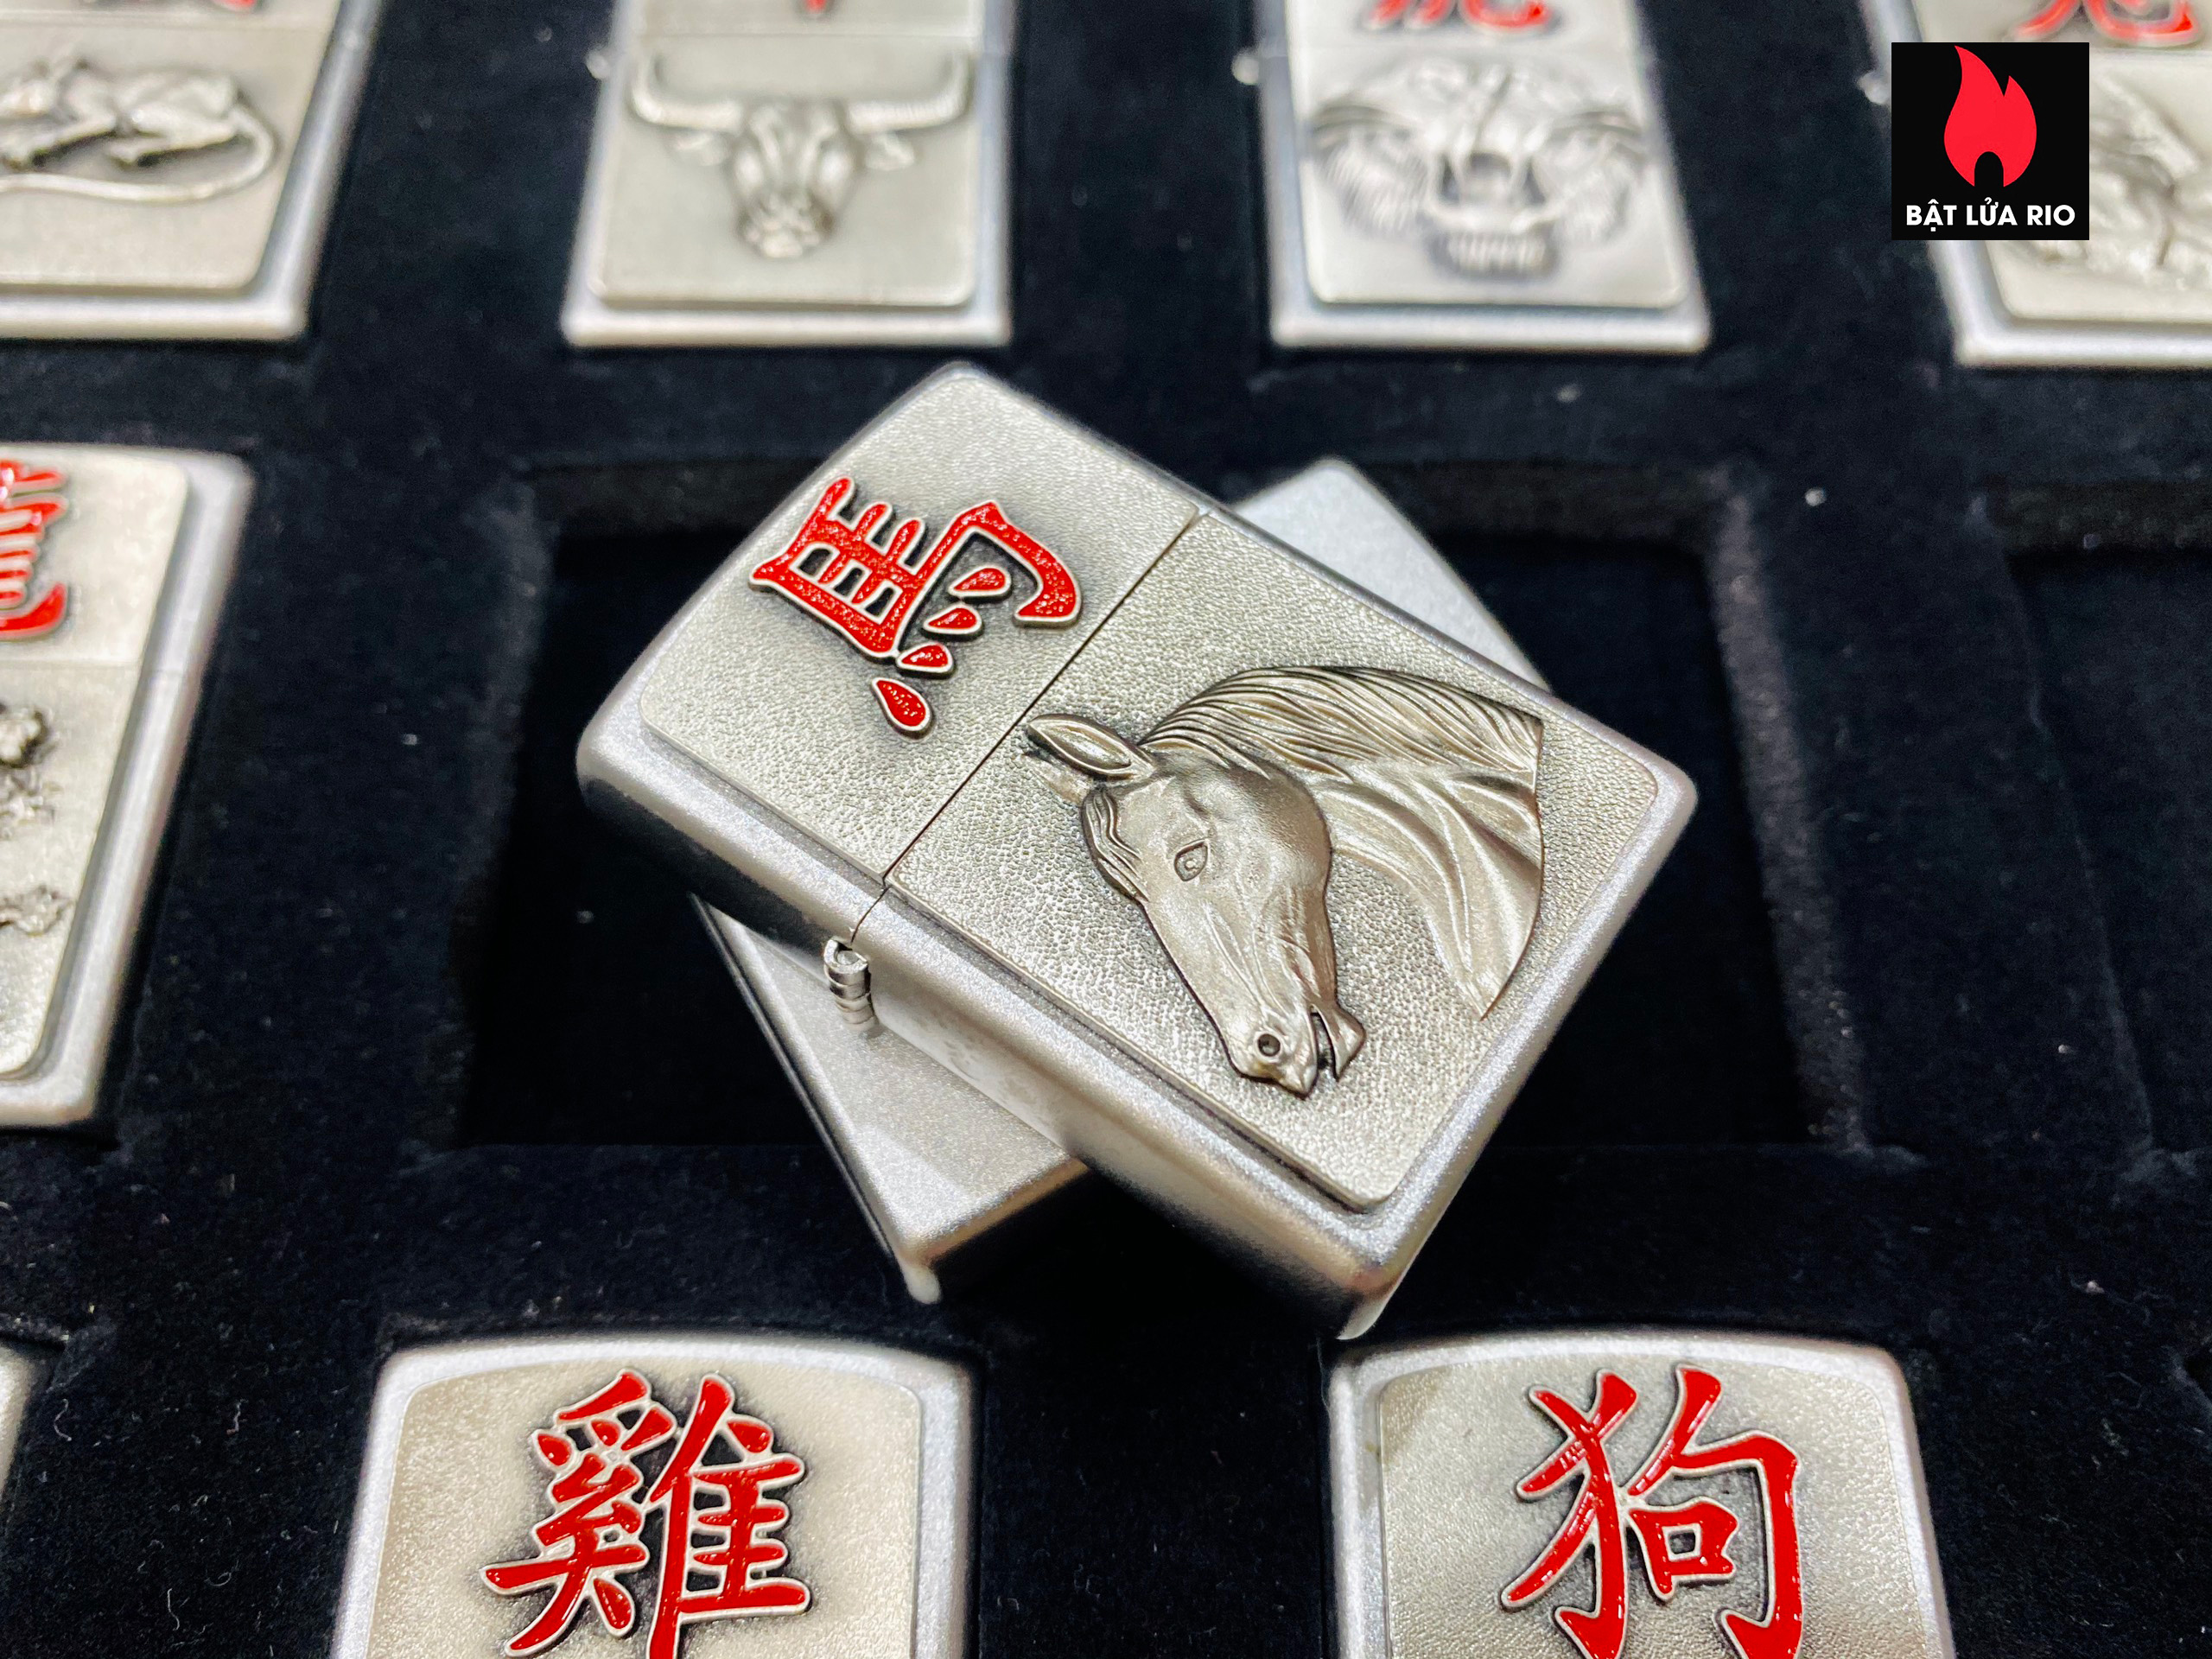 Zippo Set 2010-2011 – Zippo Lighter Collection Chinese Zodiac Set – 12 Con Giáp Châu Á 41